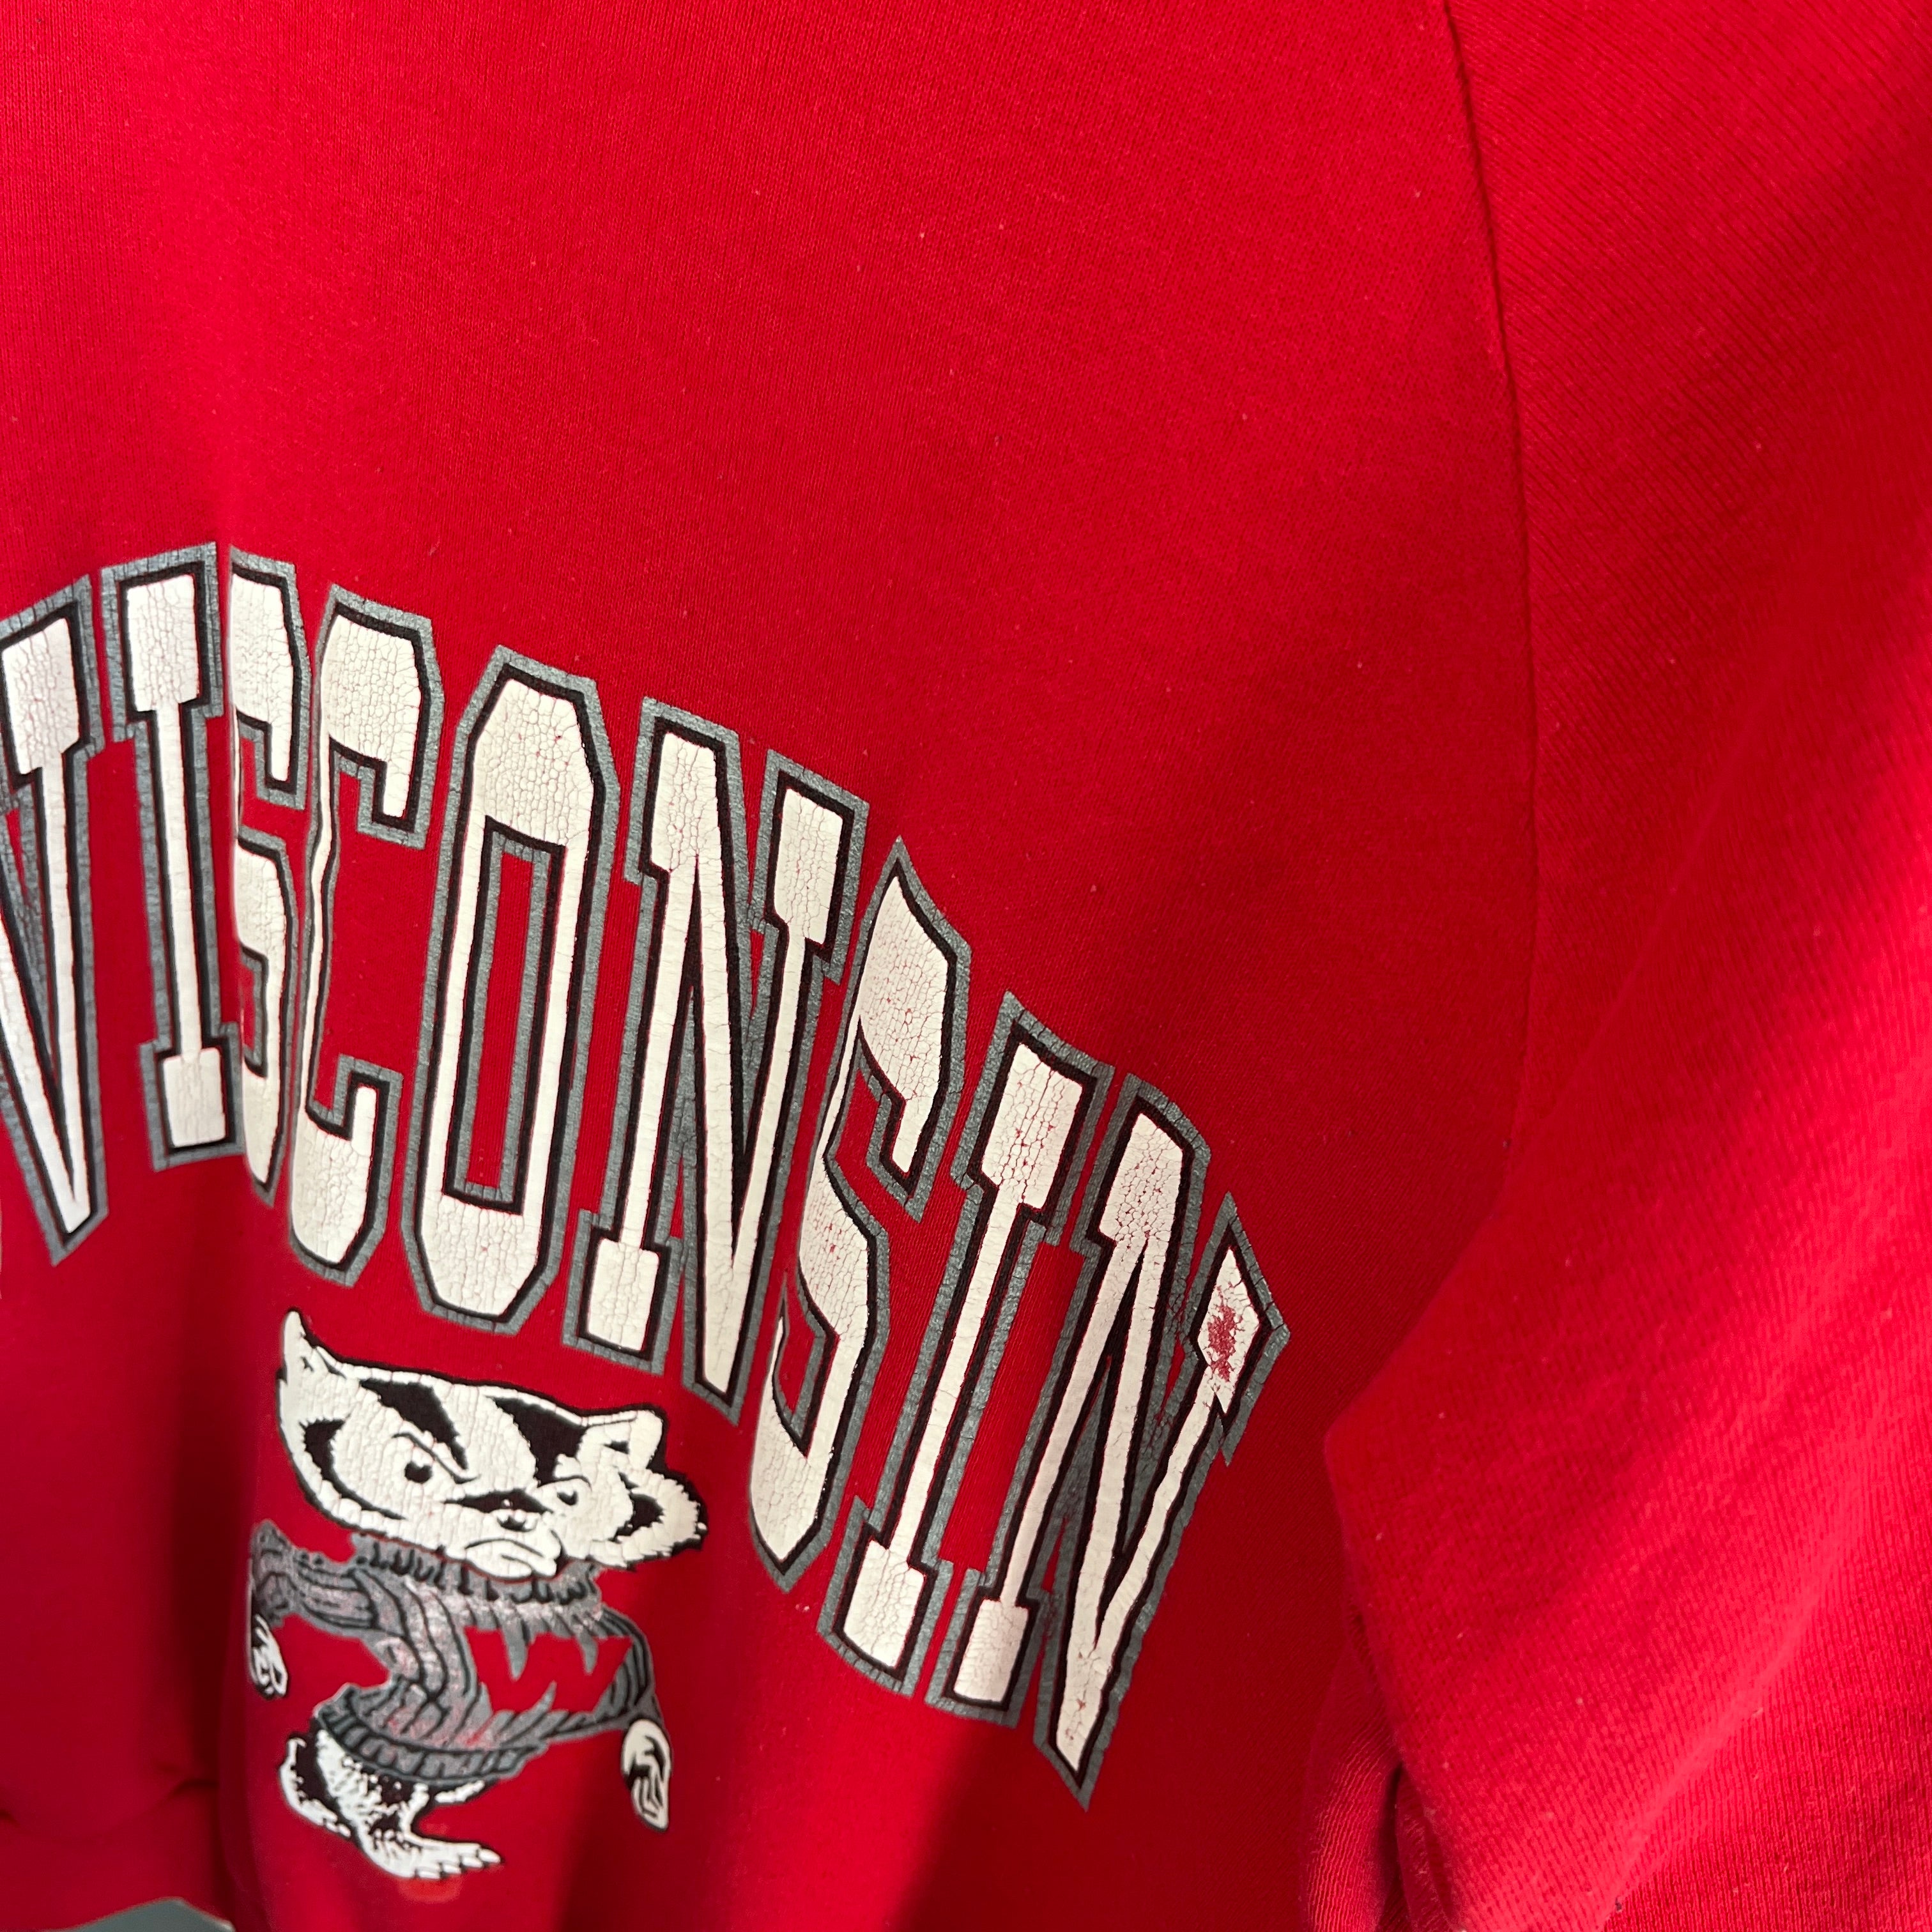 1980s Wisconsin University Sweatshirt - YES!!!!